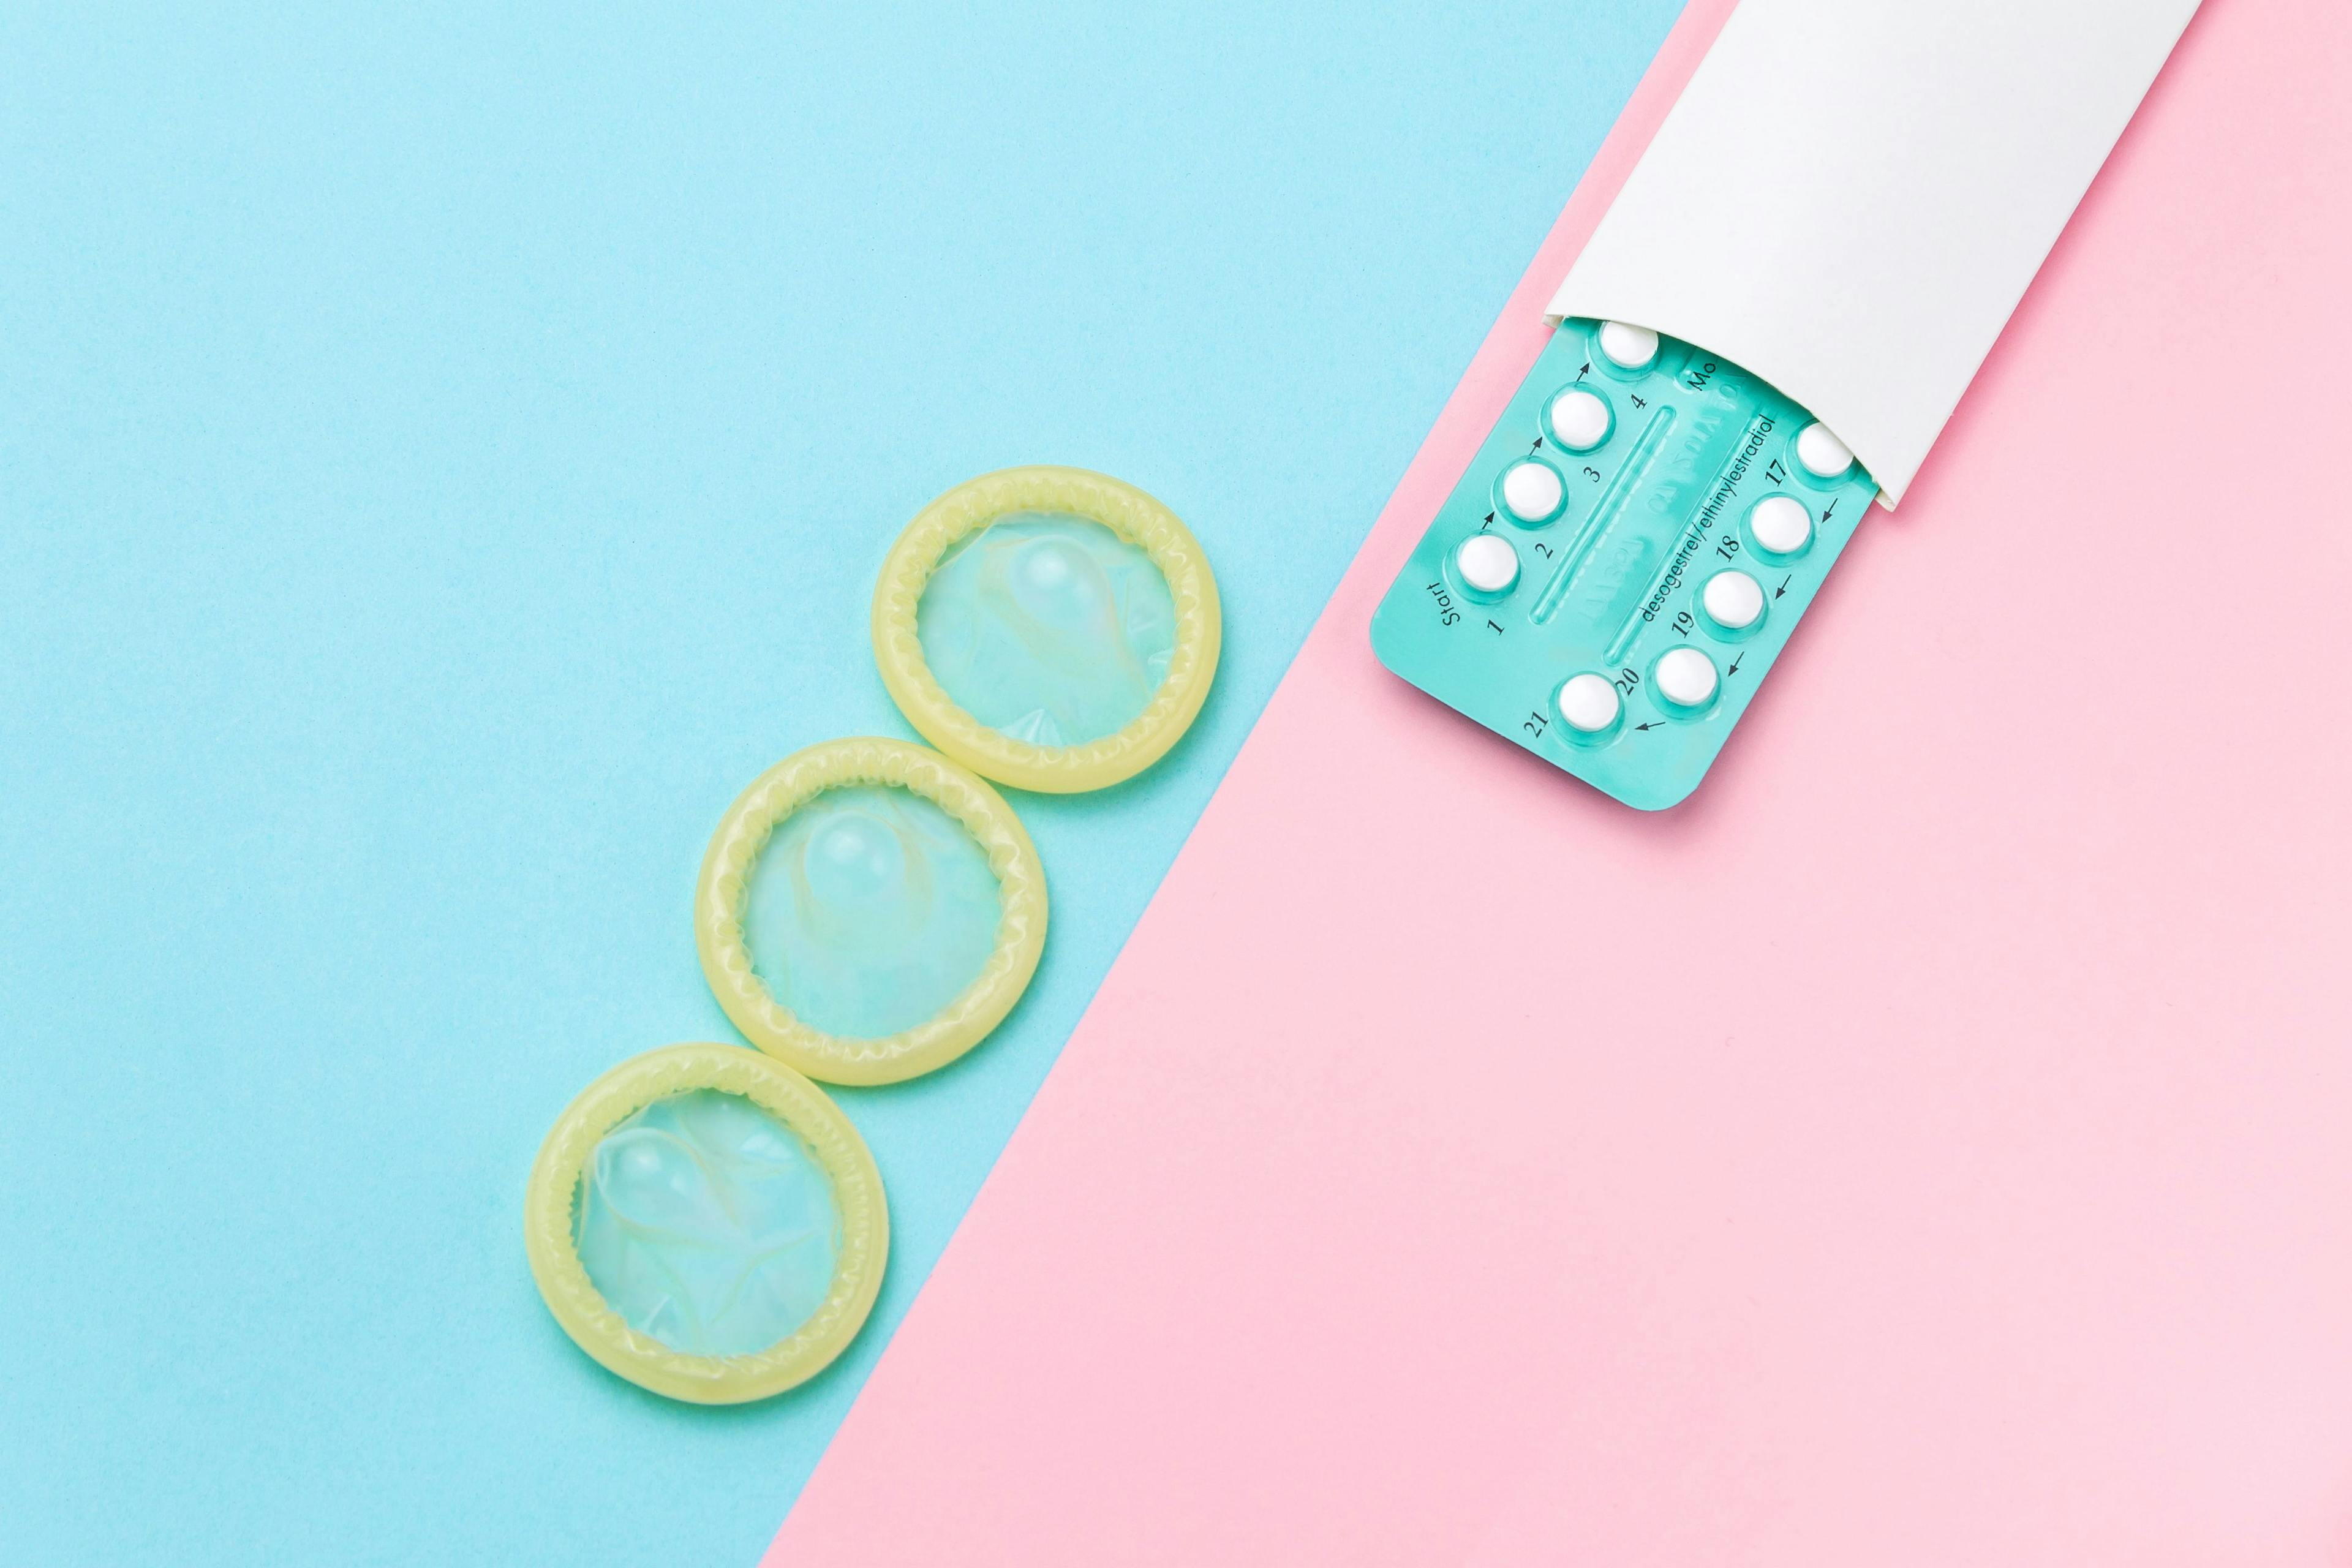 Birth control pills and condoms | Image credit: TanyaJoy – stock.adobe.com